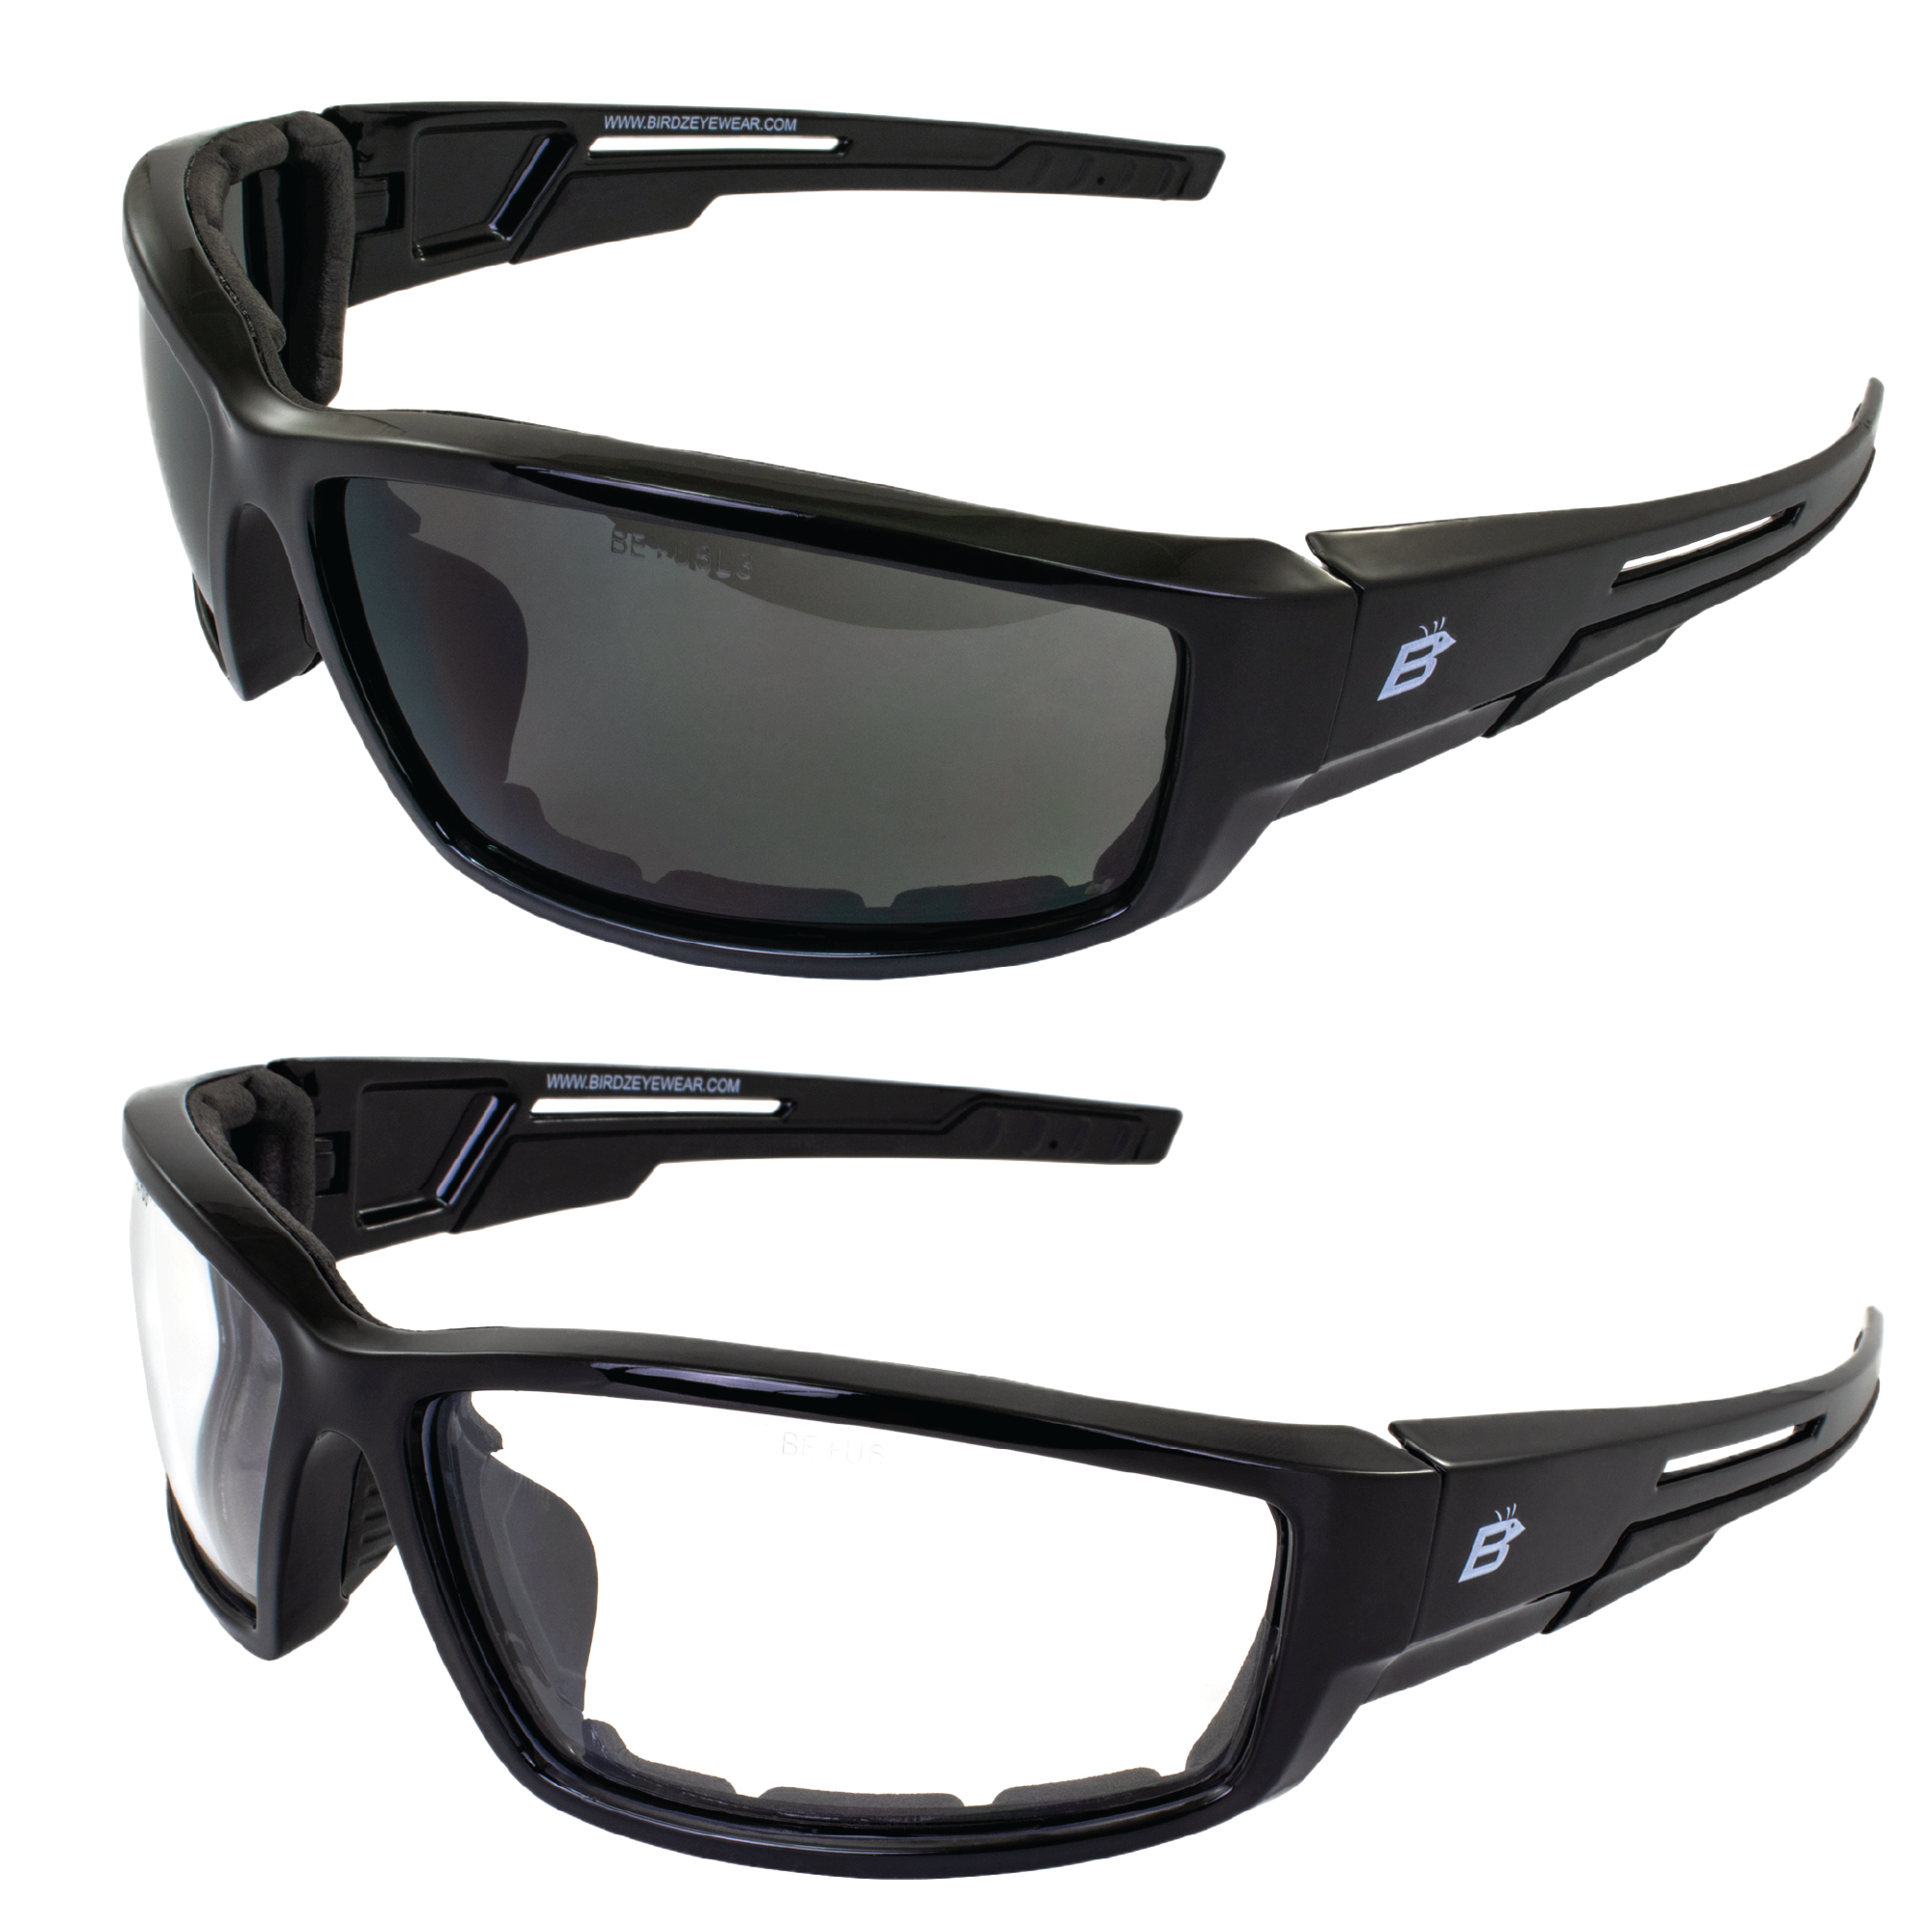 Birdz Eyewear Swoop Anti-Fog Padded Motorcycle Riding Sunglasses Black Frame Lenses for Day & Night ANSI Z87 .1 - image 1 of 7